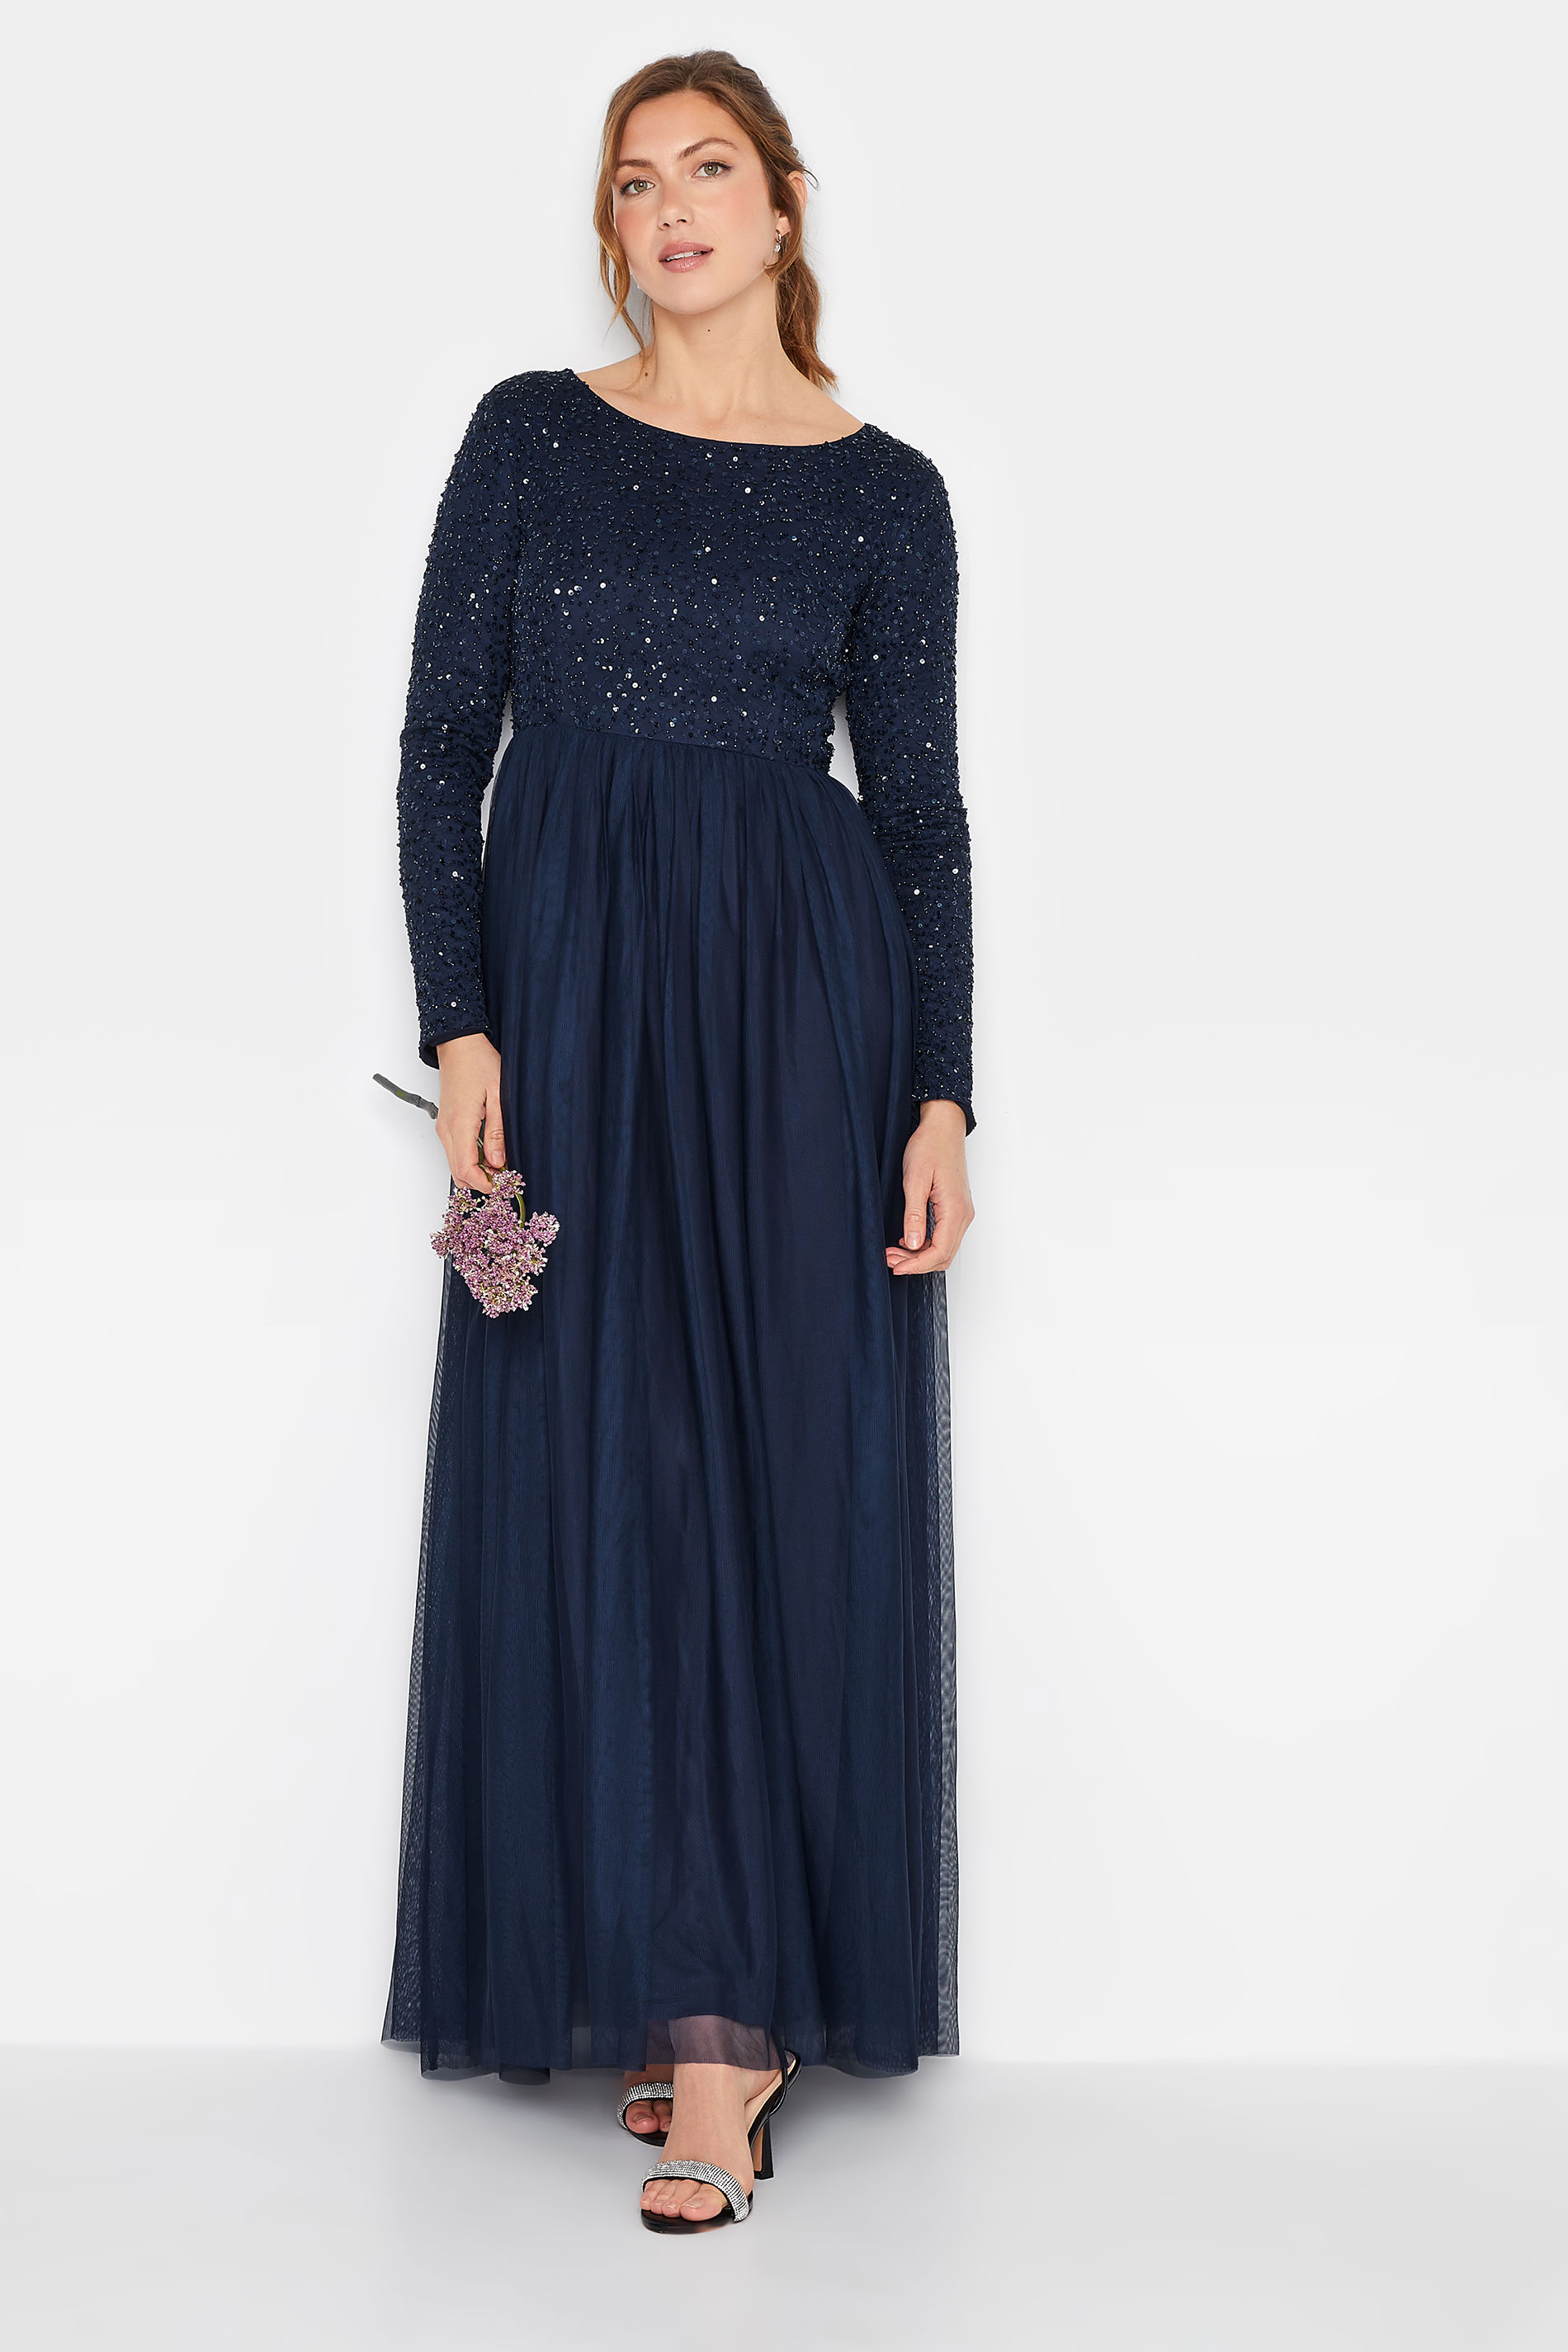 LTS Tall Women's Navy Blue Long Sleeve Sequin Hand Embellished Maxi Dress | Long Tall Sally 1